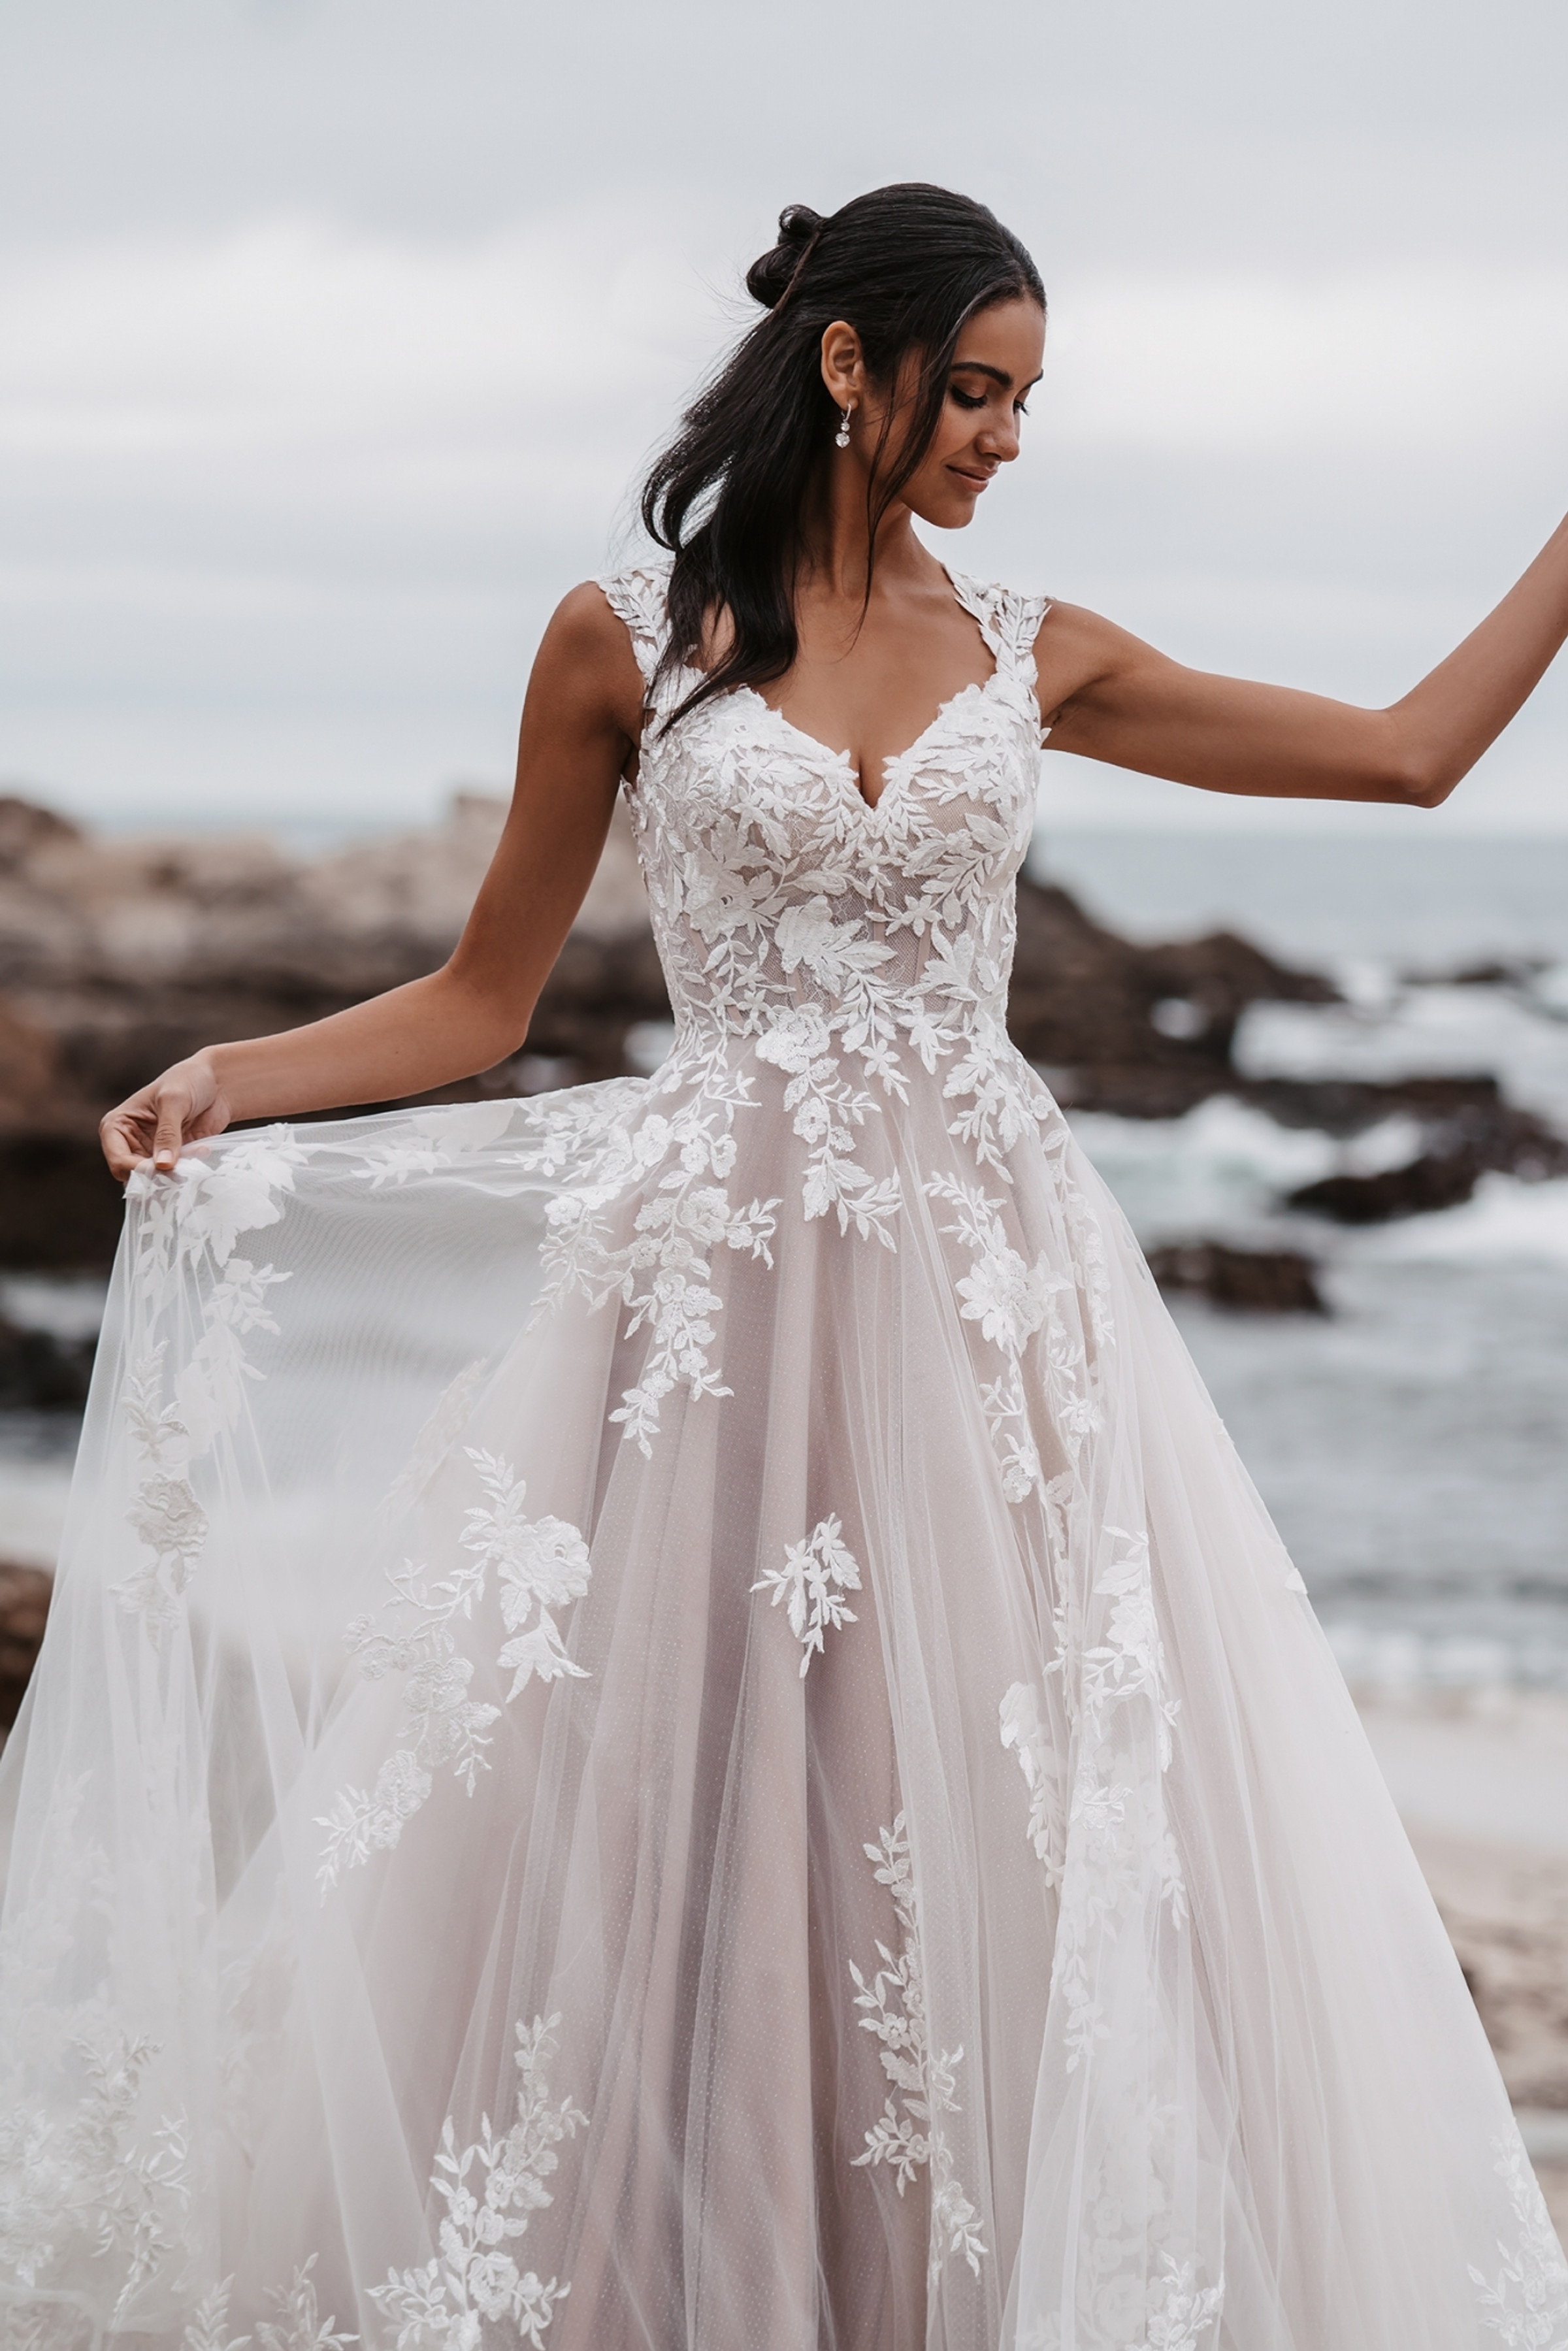 Lindsey Wedding Dress 8279 Size 12 Ivory/Creme - Pierres Bridal